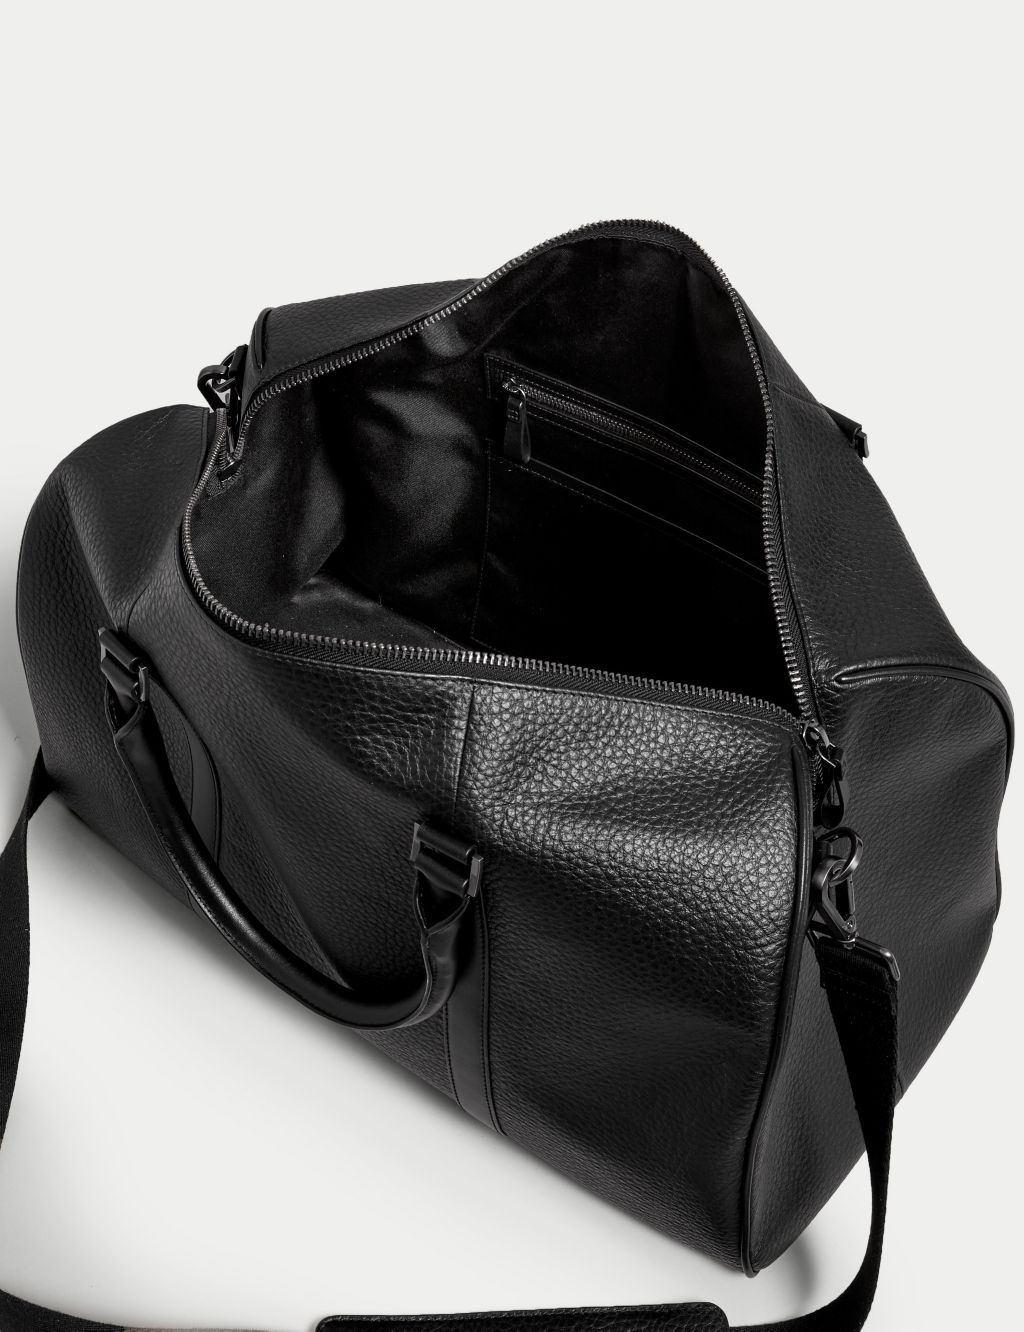 Leather Weekend Bag image 3